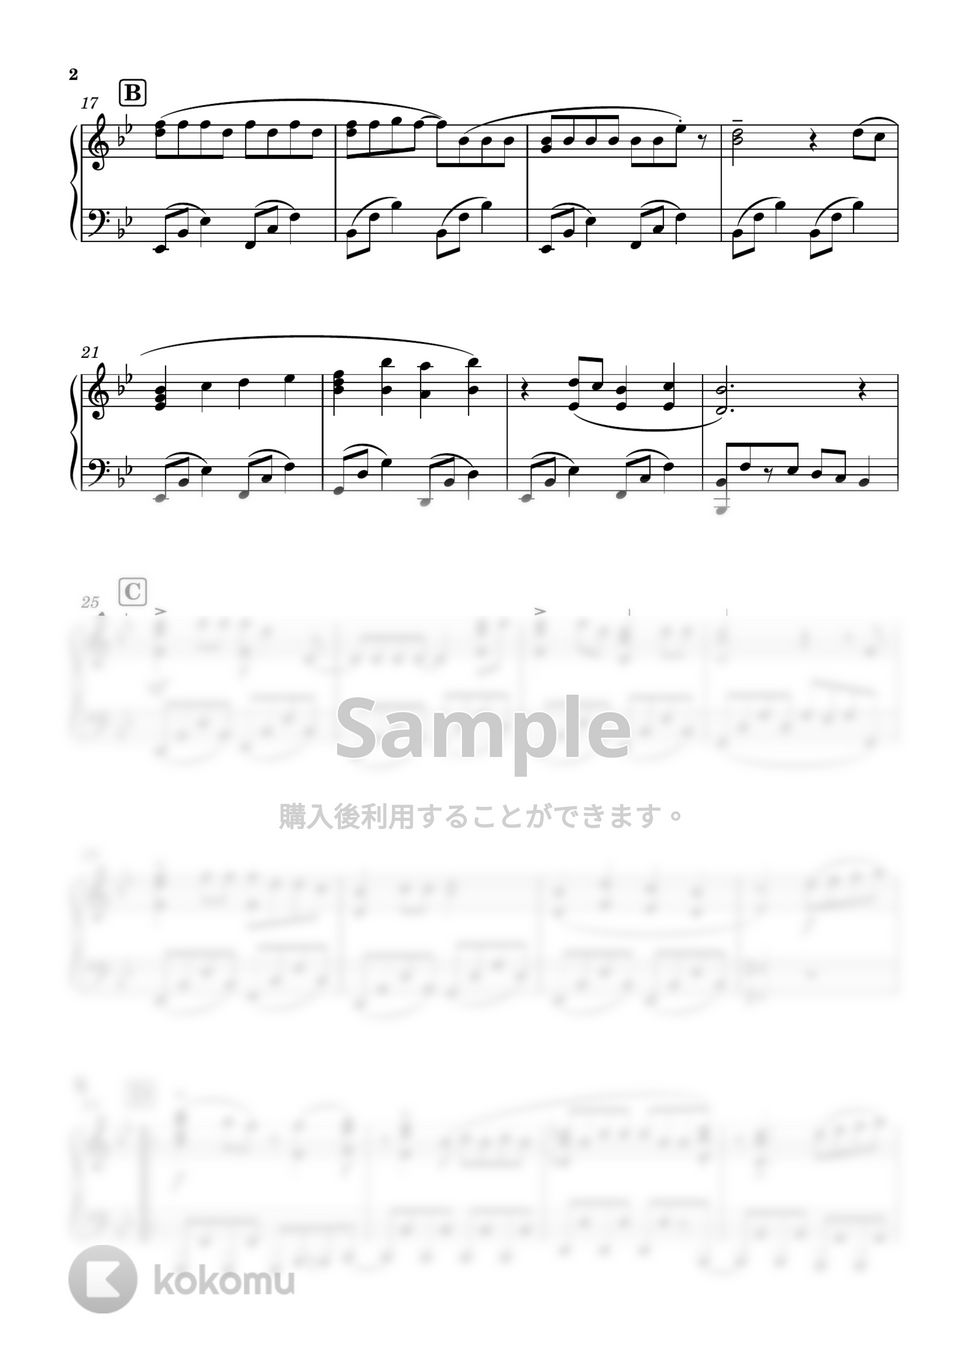 Mrs. GREEN APPLE - ブルーアンビエンス feat. asmi (ピアノソロ / 上級) by SuperMomoFactory